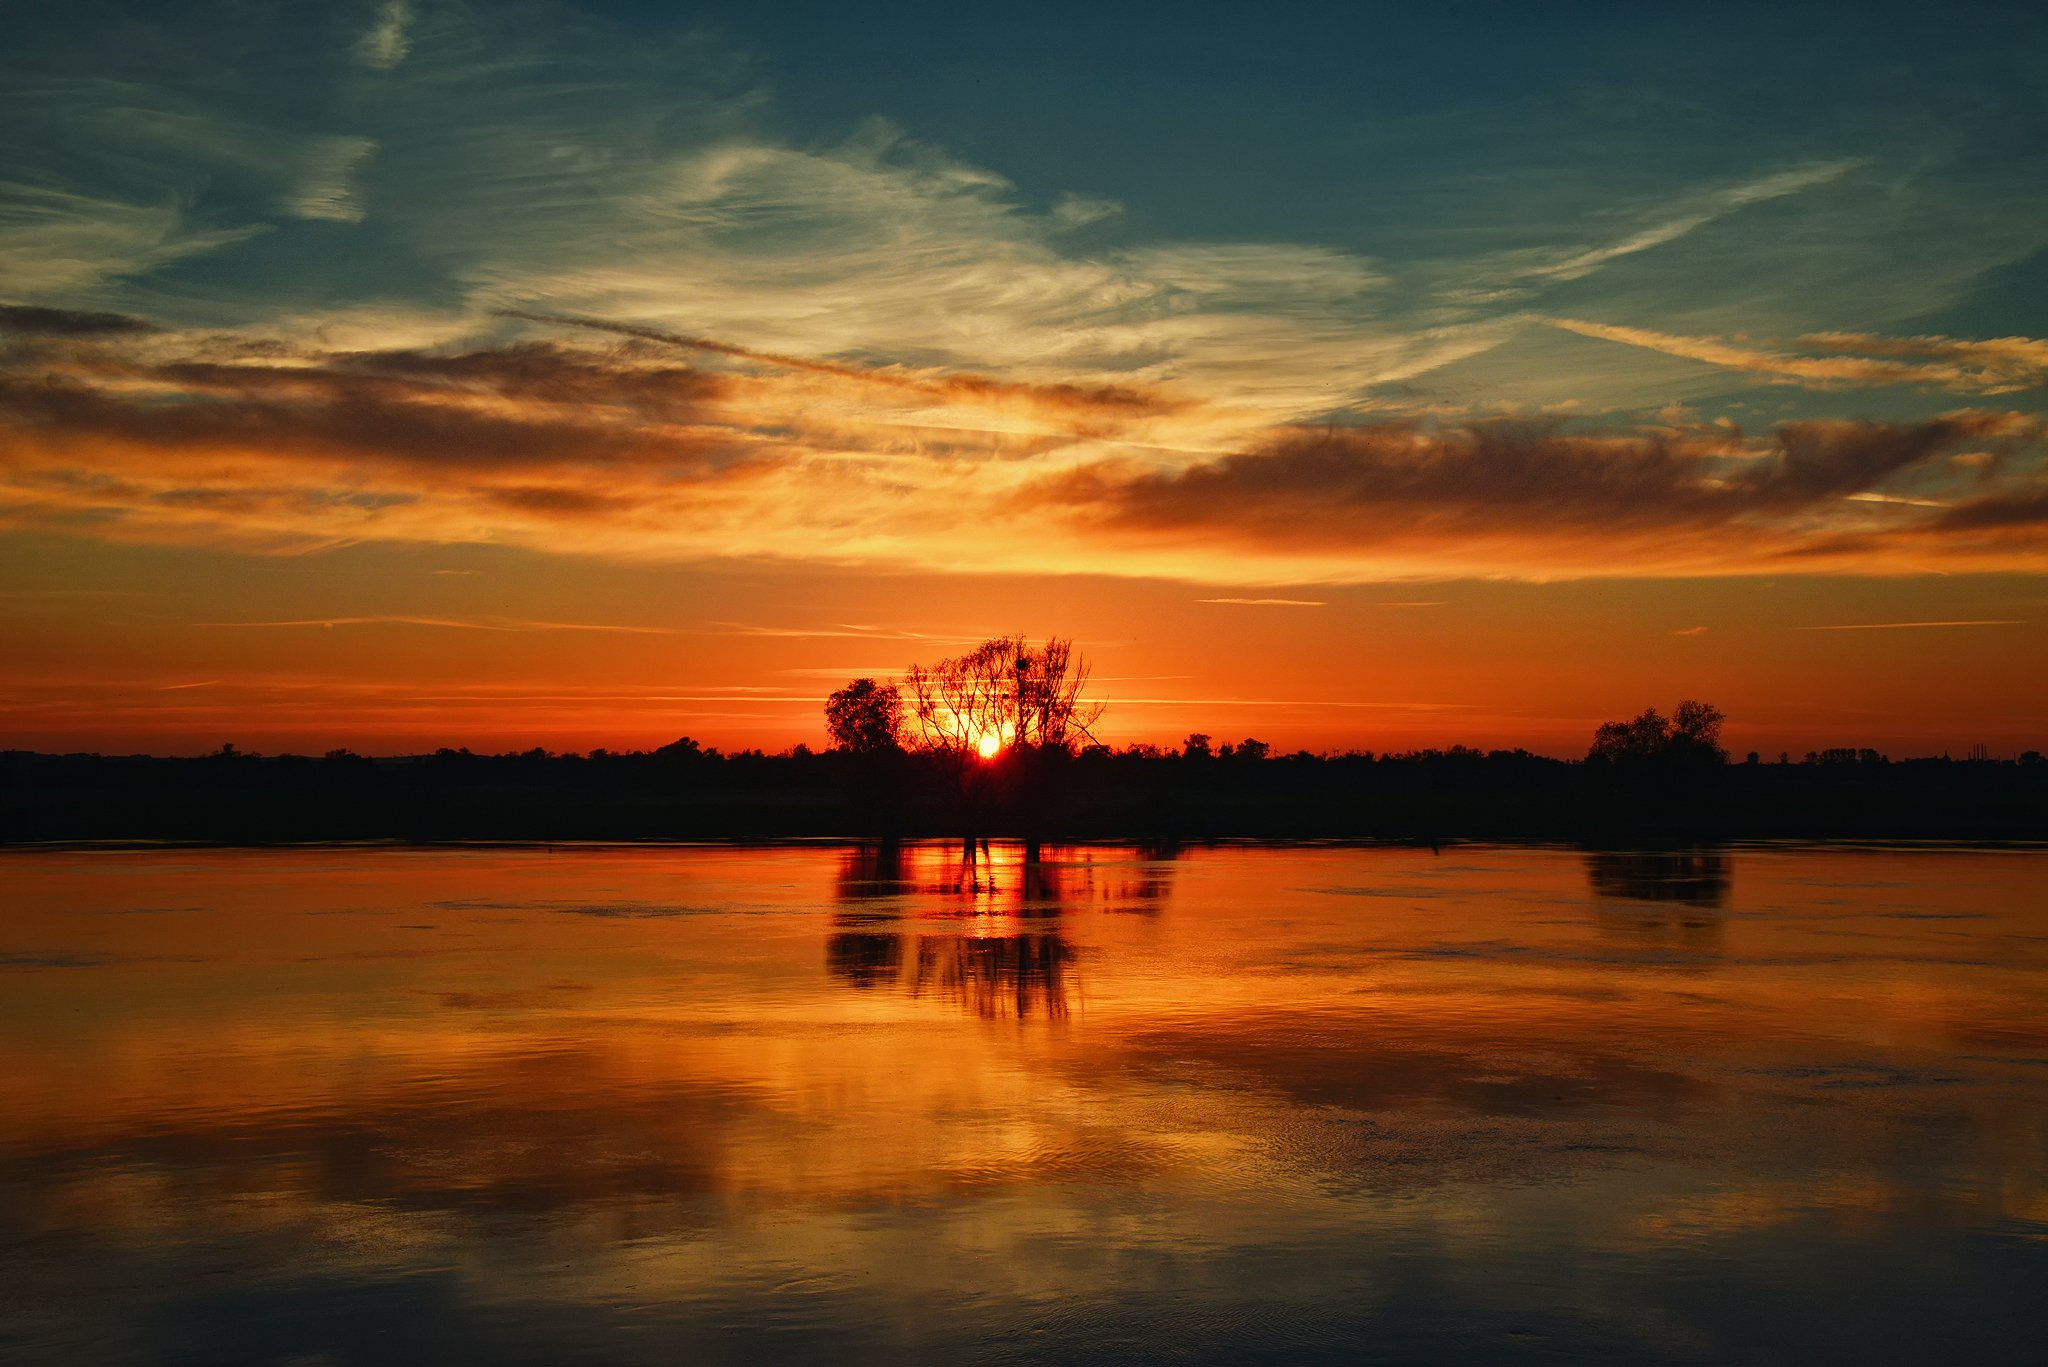 sunsed sundown odra river poland red sun water tree clouds magic, Radoslaw Dranikowski